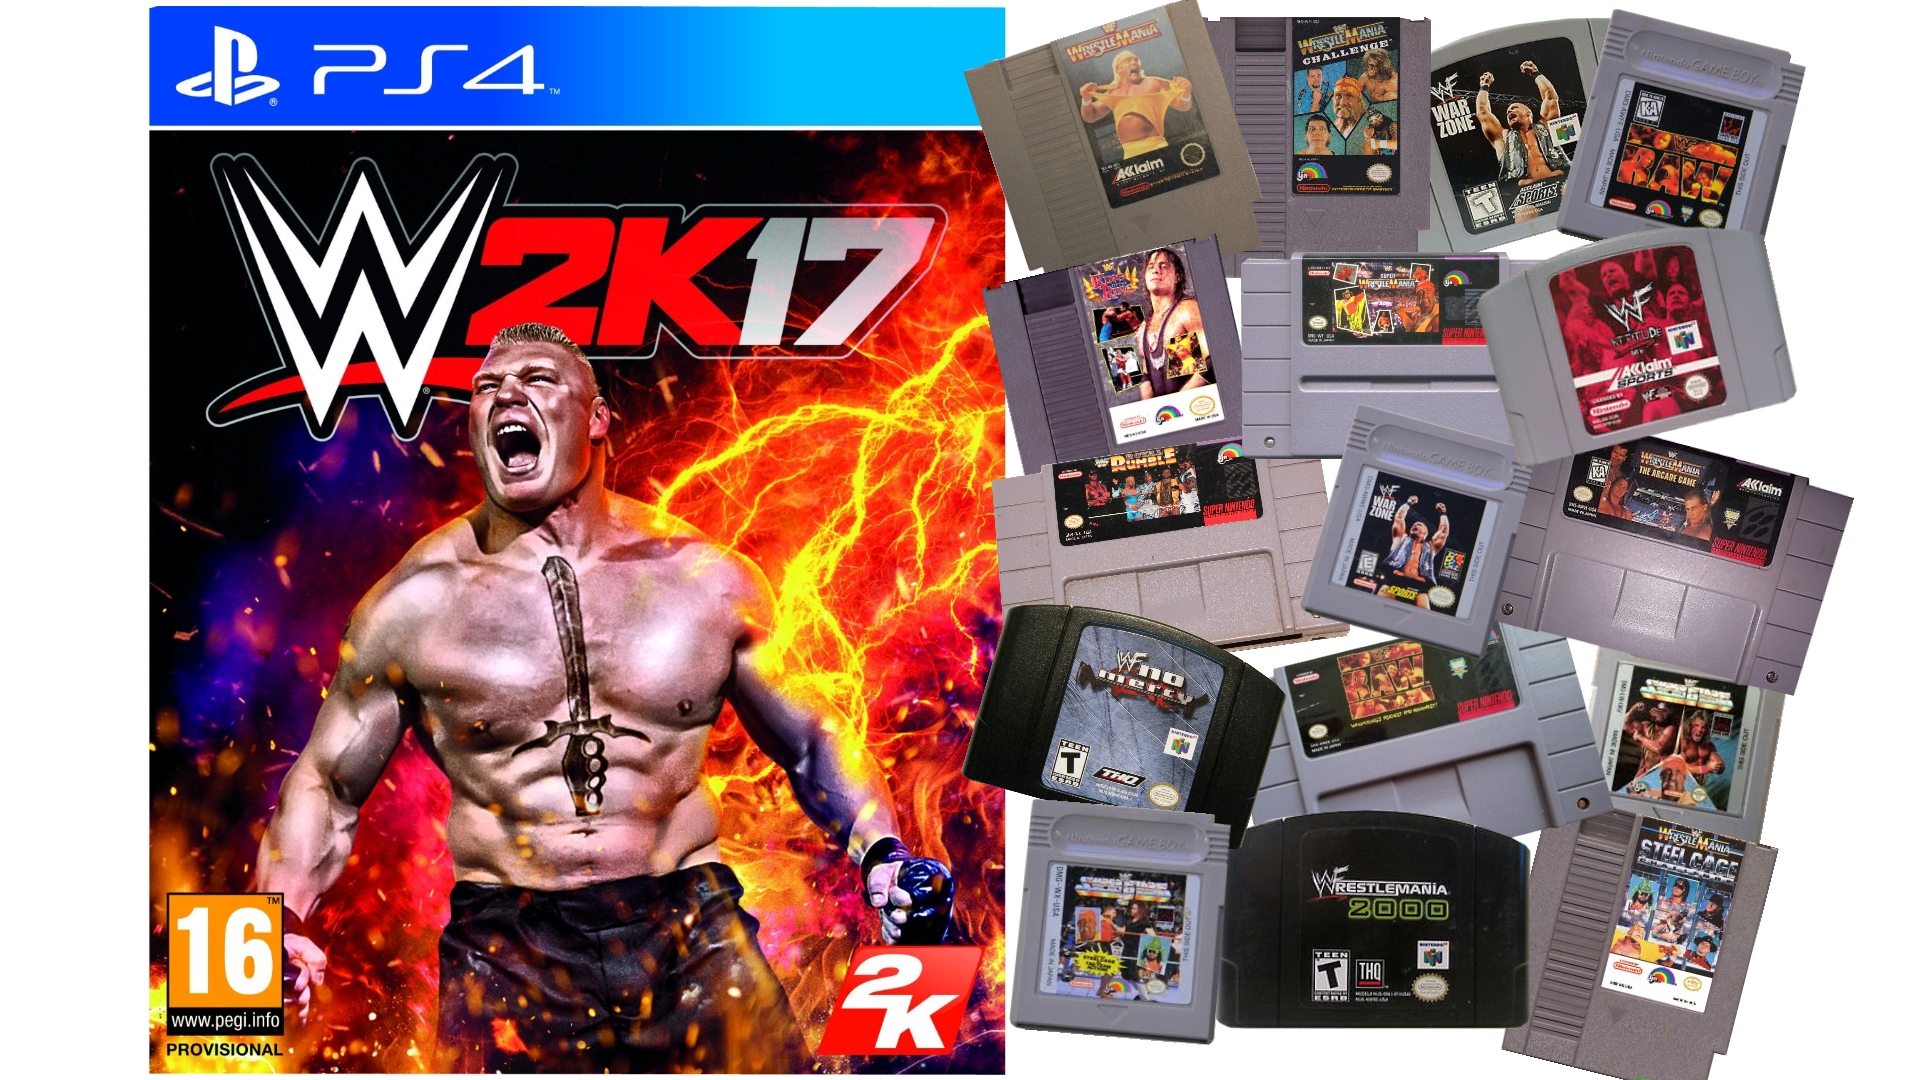 WWE 2K17 vs Old WWF Games